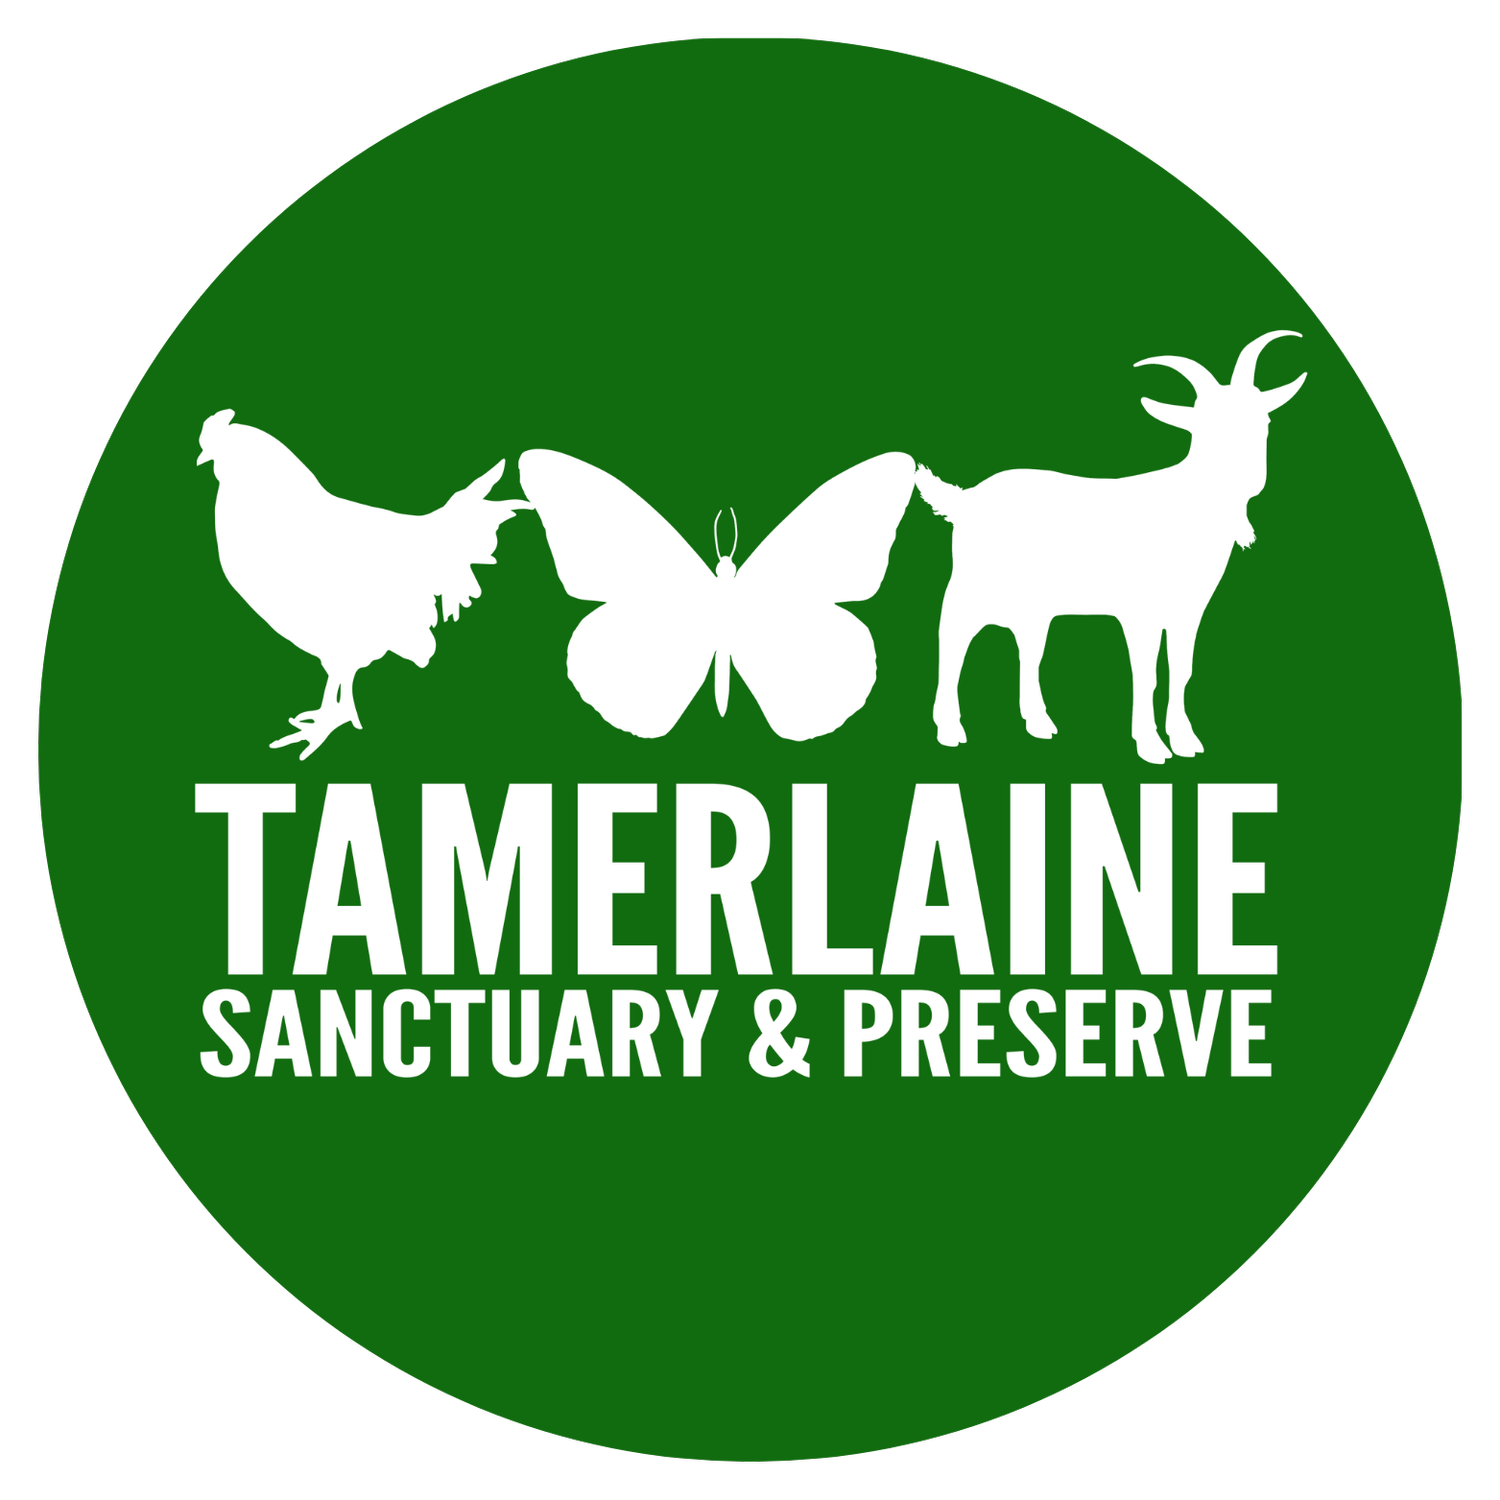 Tamerlaine Sanctuary & Preserve